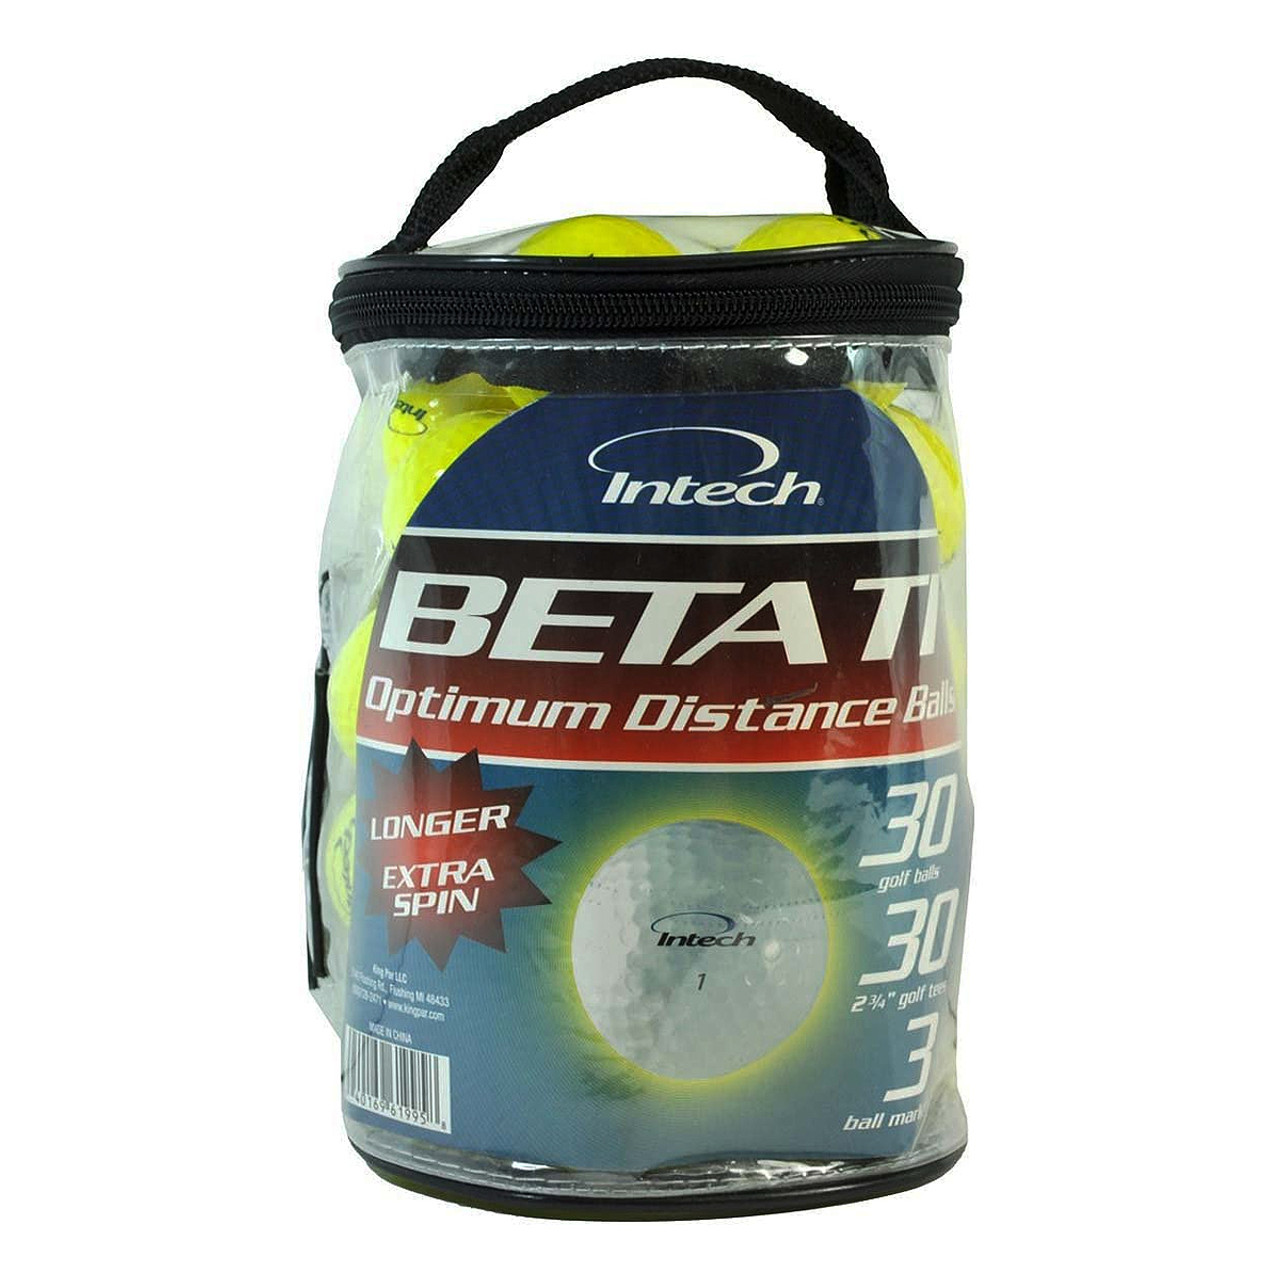 Intech Beta Ti Golf Balls - 30 Balls & Tees